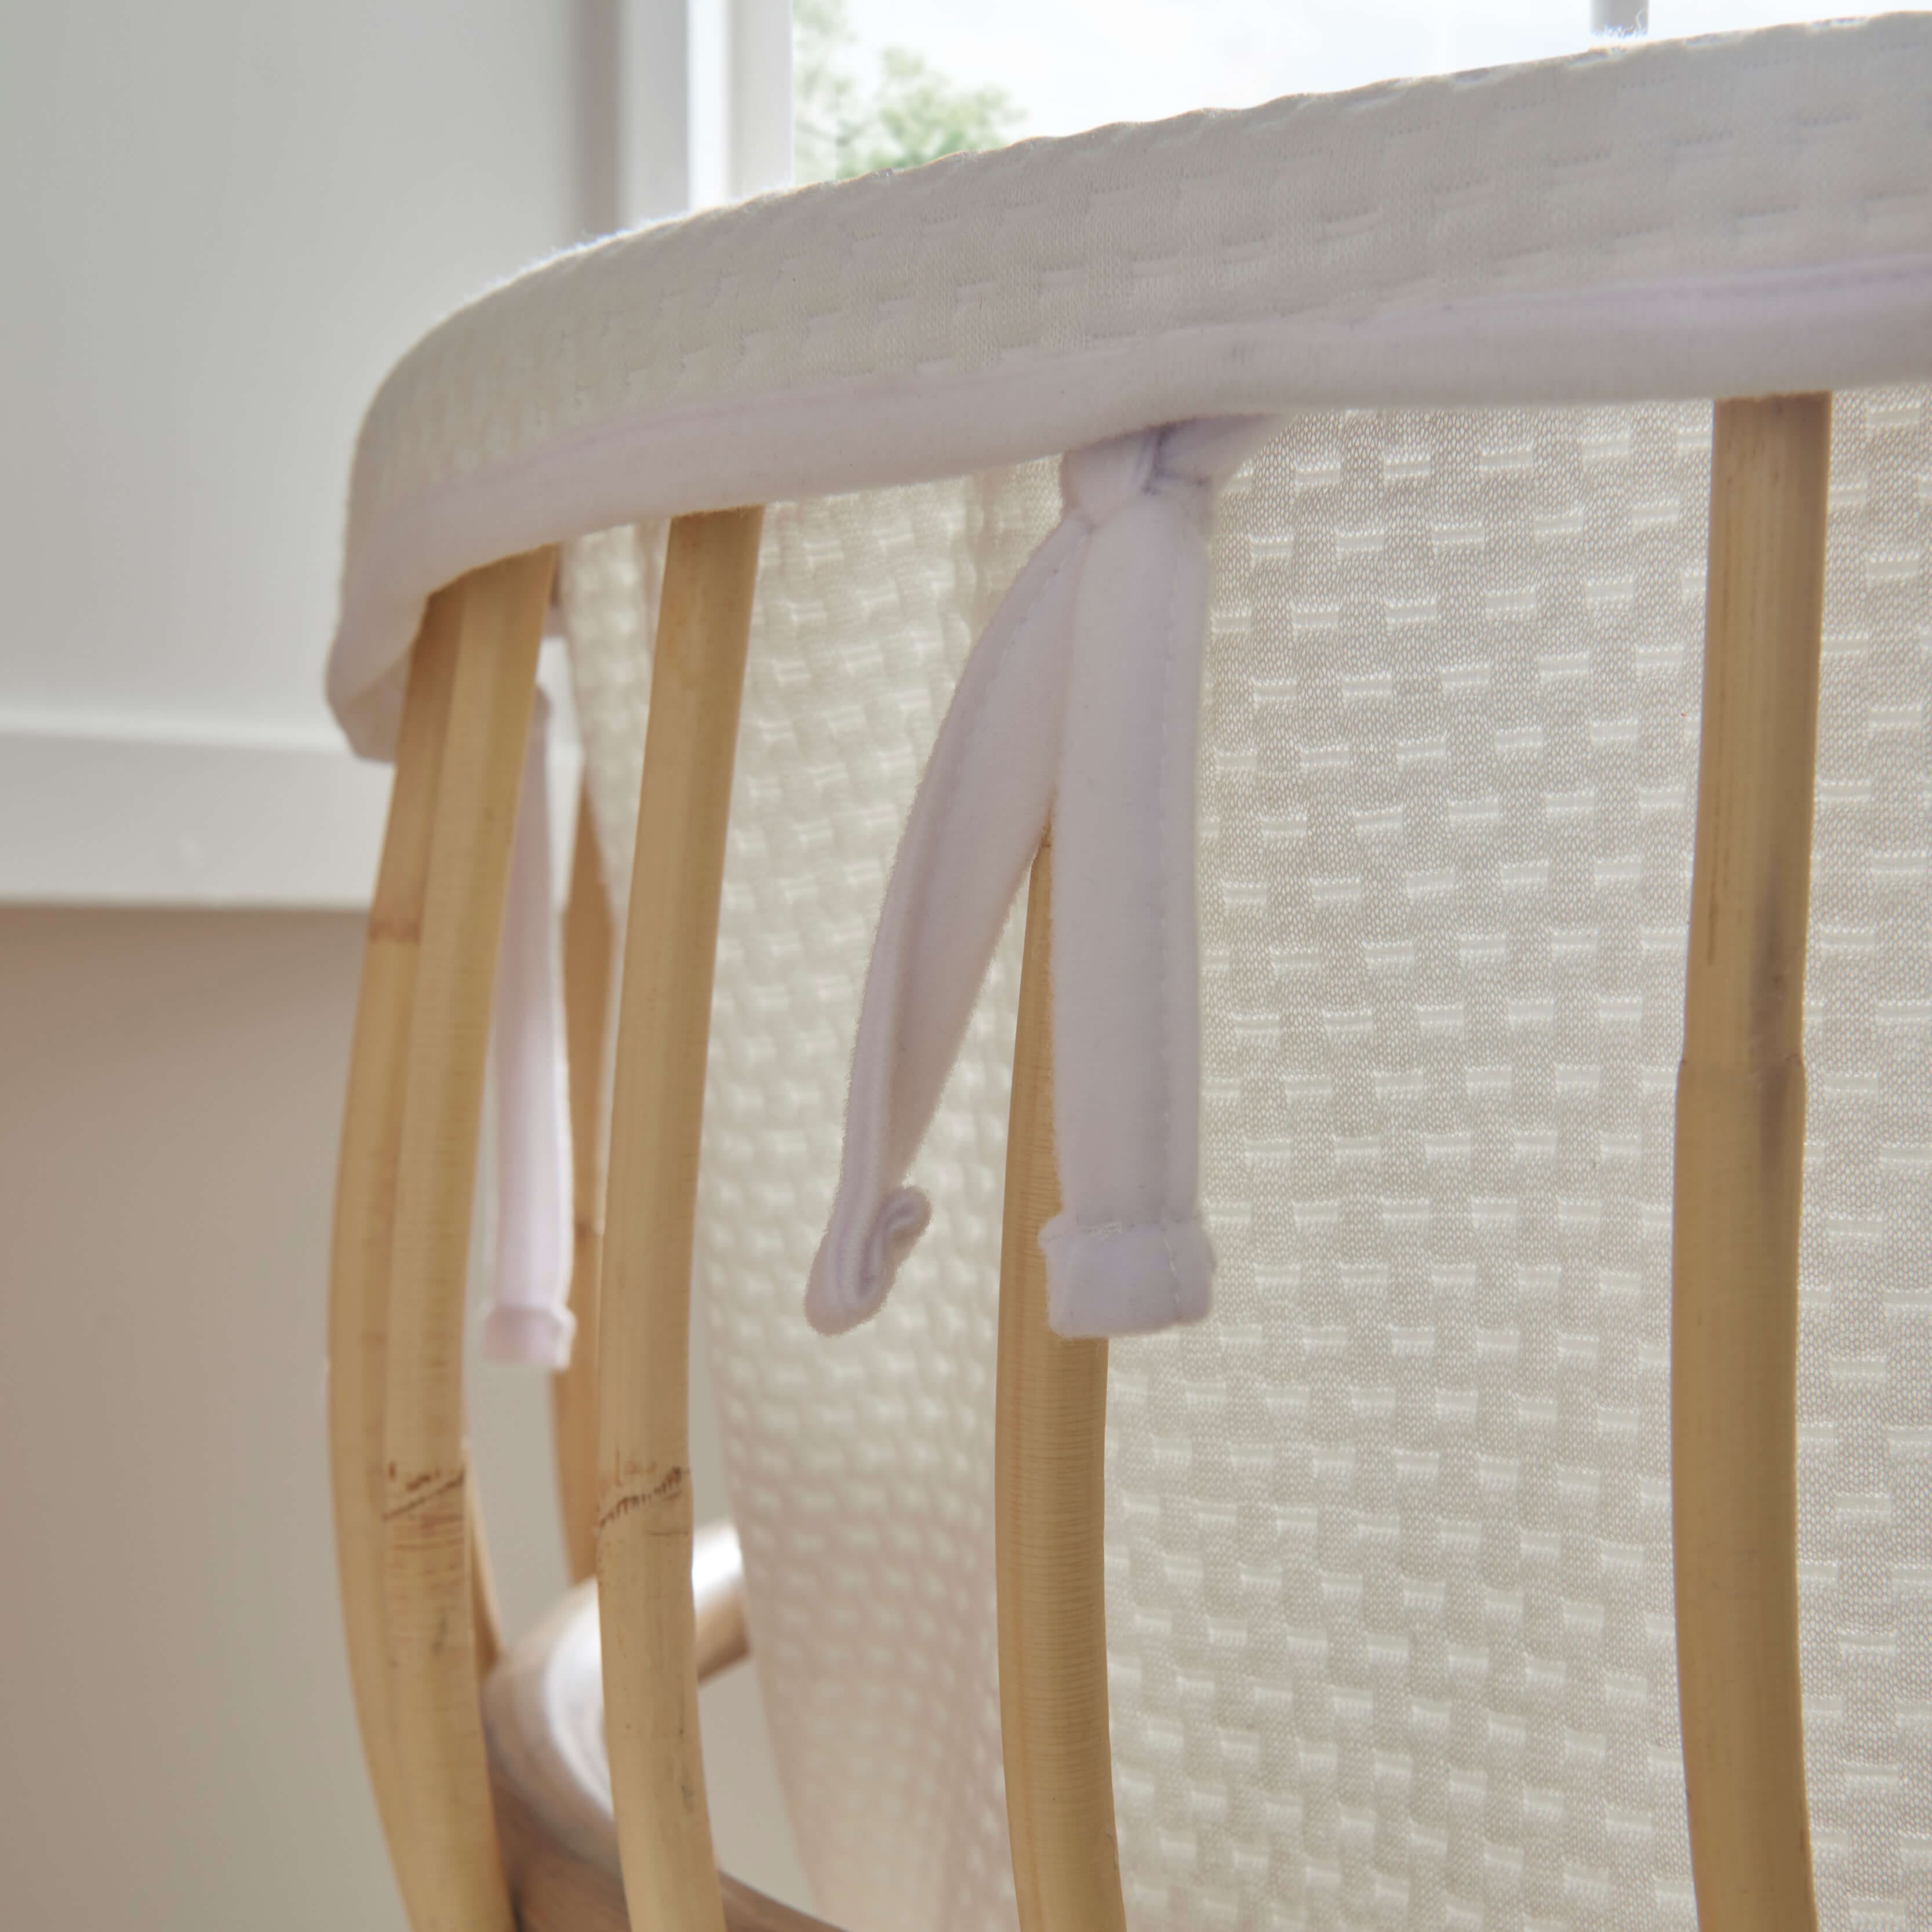 CuddleCo Aria Crib and Hanging Rail Room Set in Rattan Nursery Room Sets FRN/CUD/151168 5060971151168